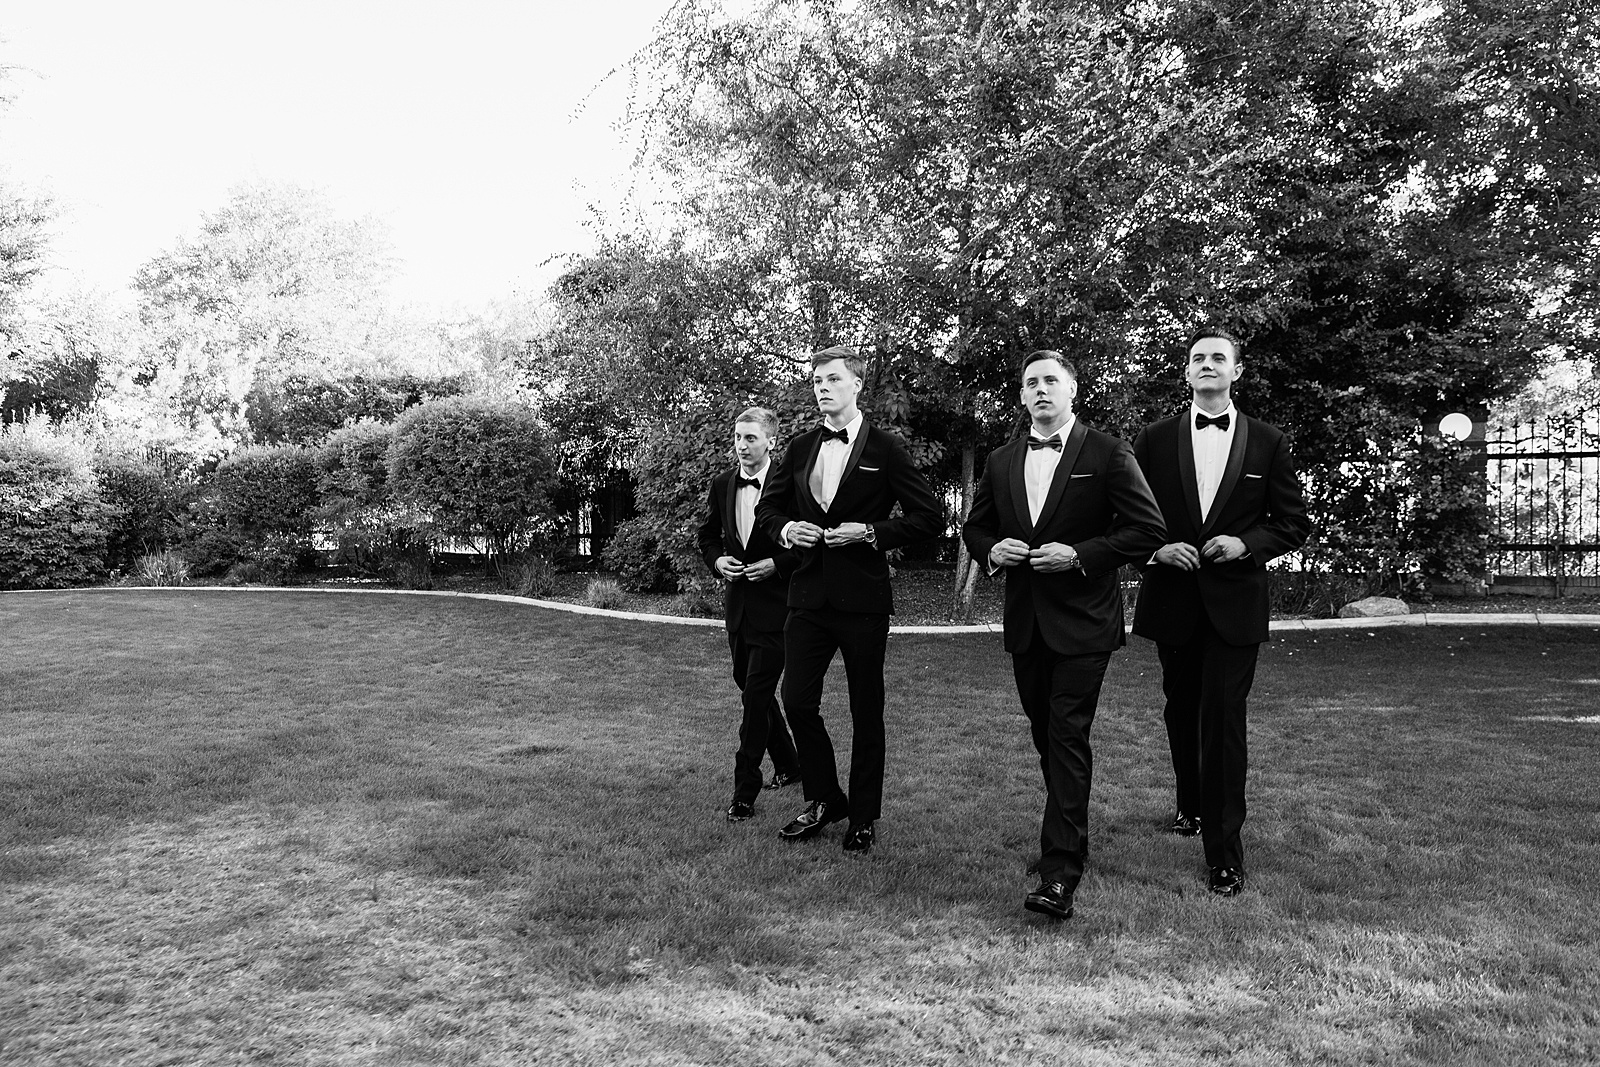 Groom and groomsmen walking together at a Stonebridge Manor wedding by Arizona wedding photographer PMA Photography.